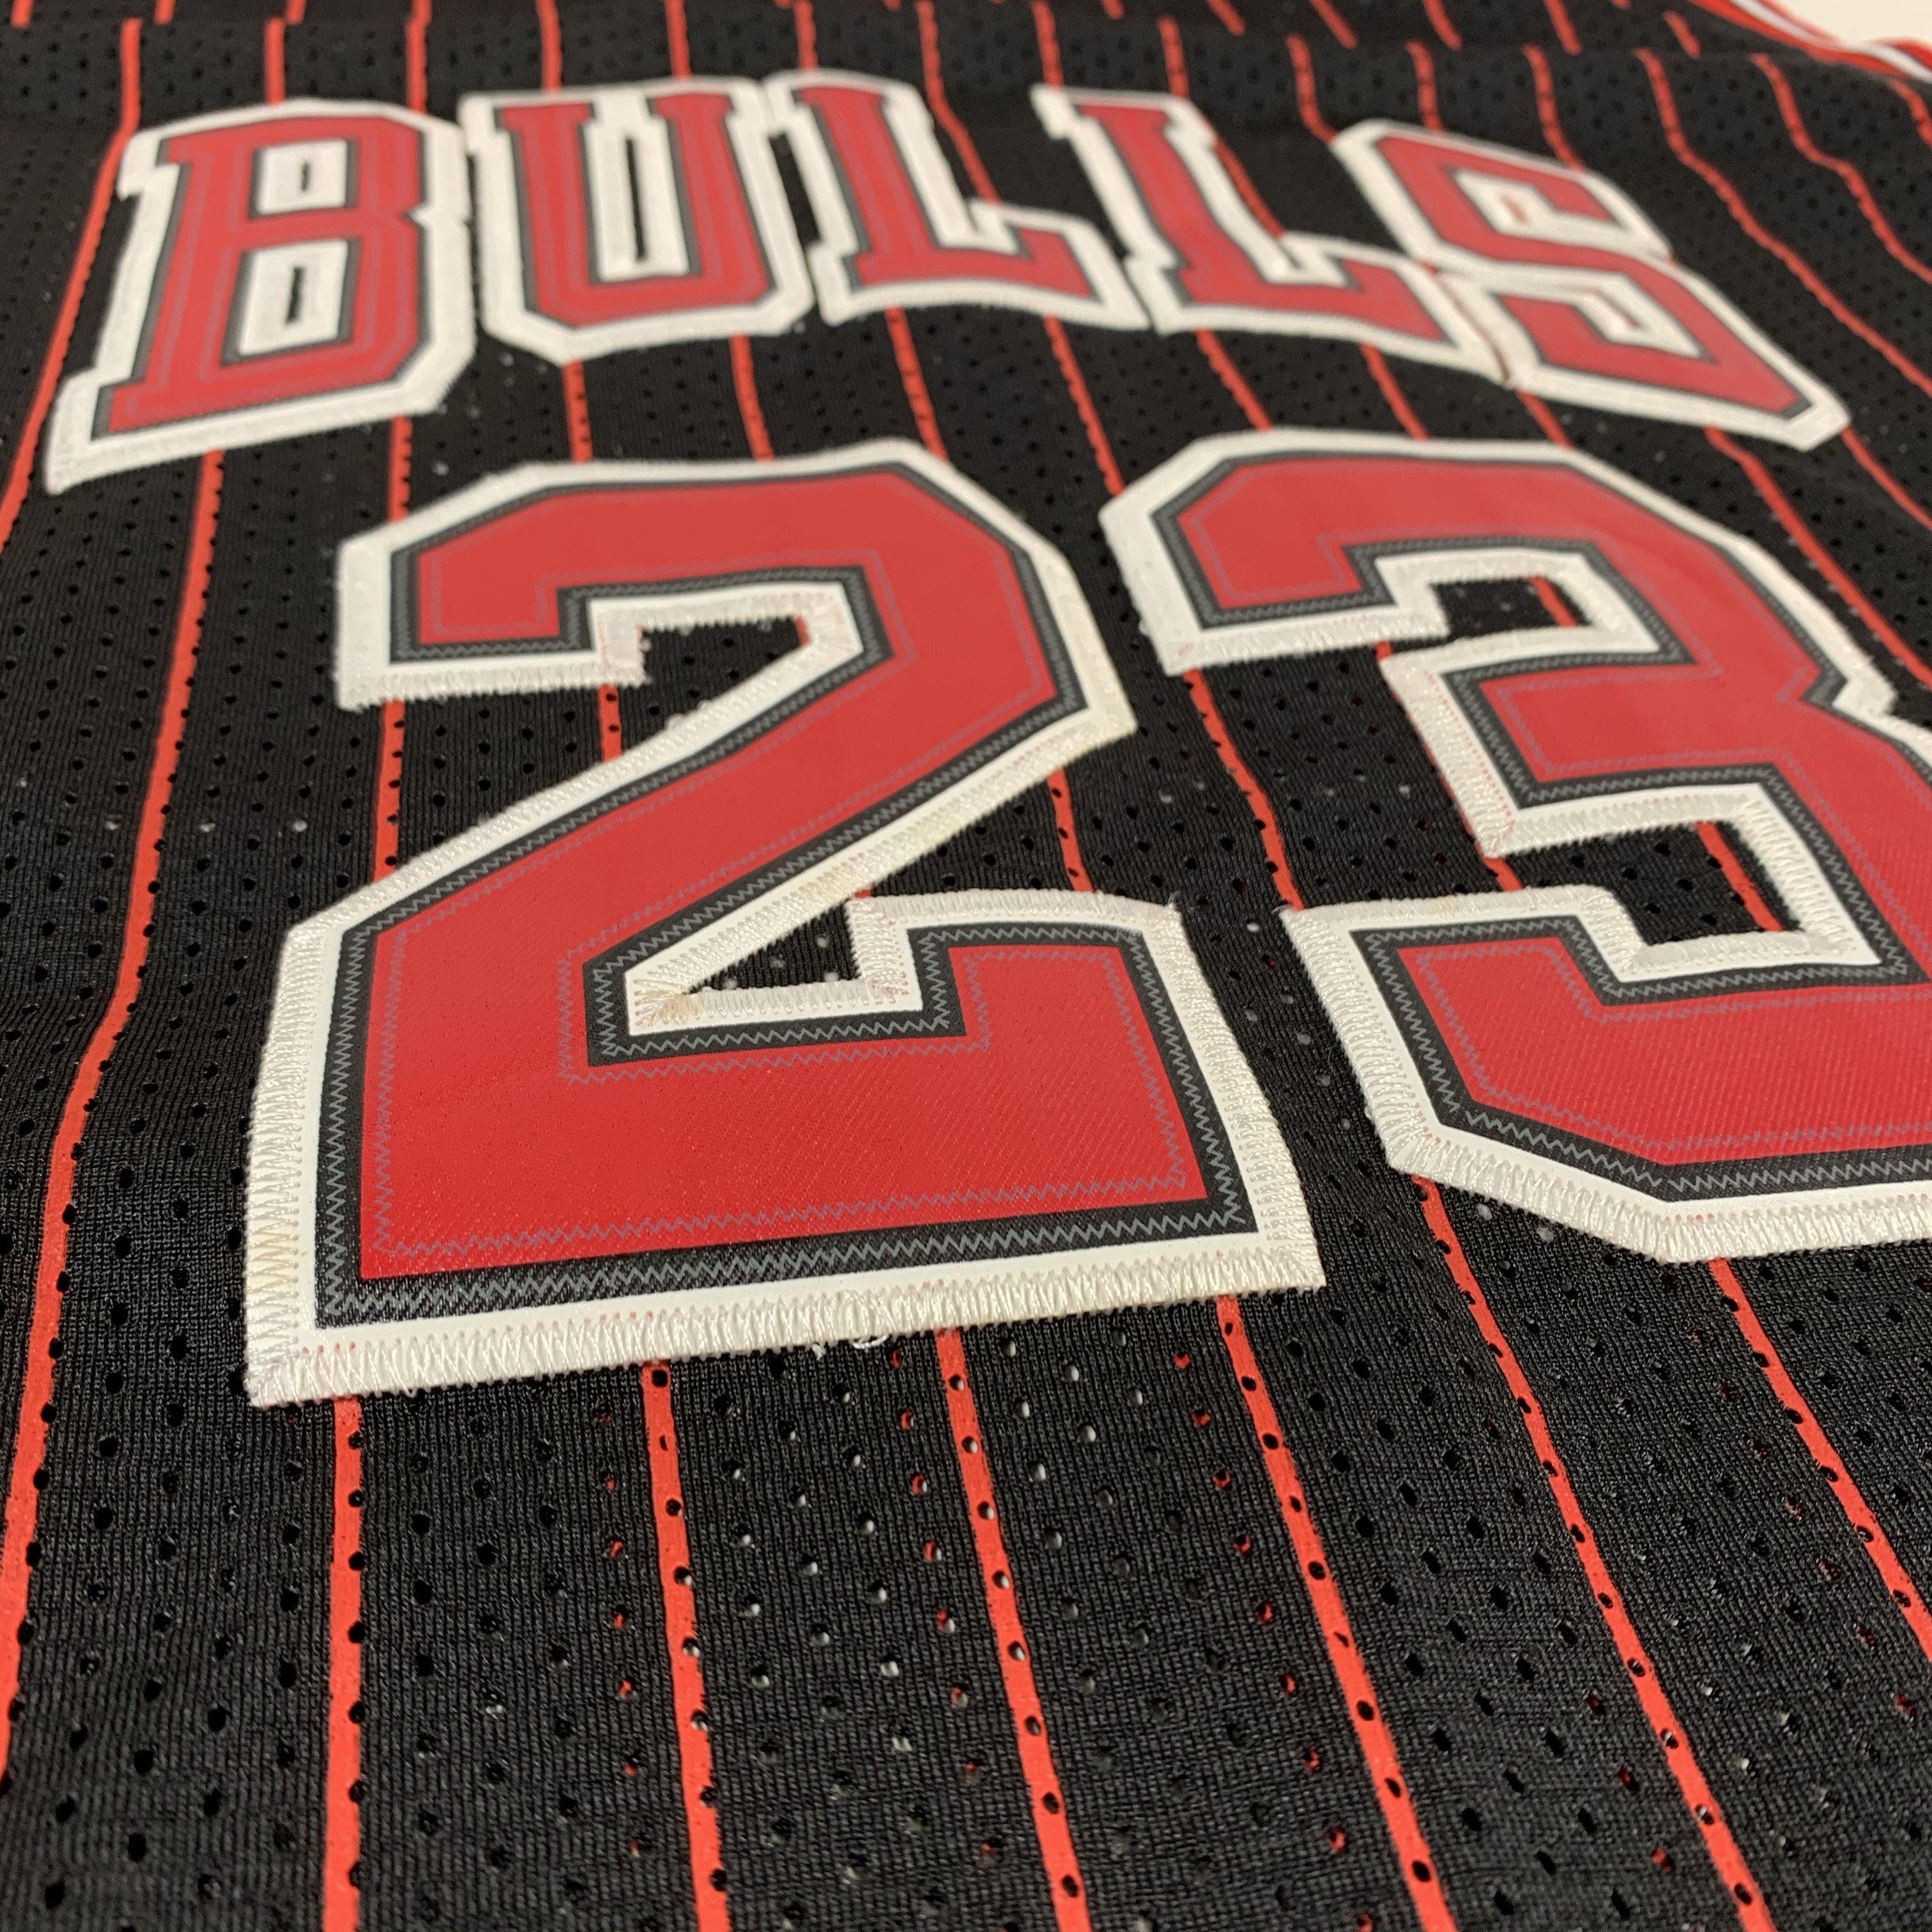 Vintage Michael Jordan Jersey Bulls Nike Size 52 NBA Finals Jersey